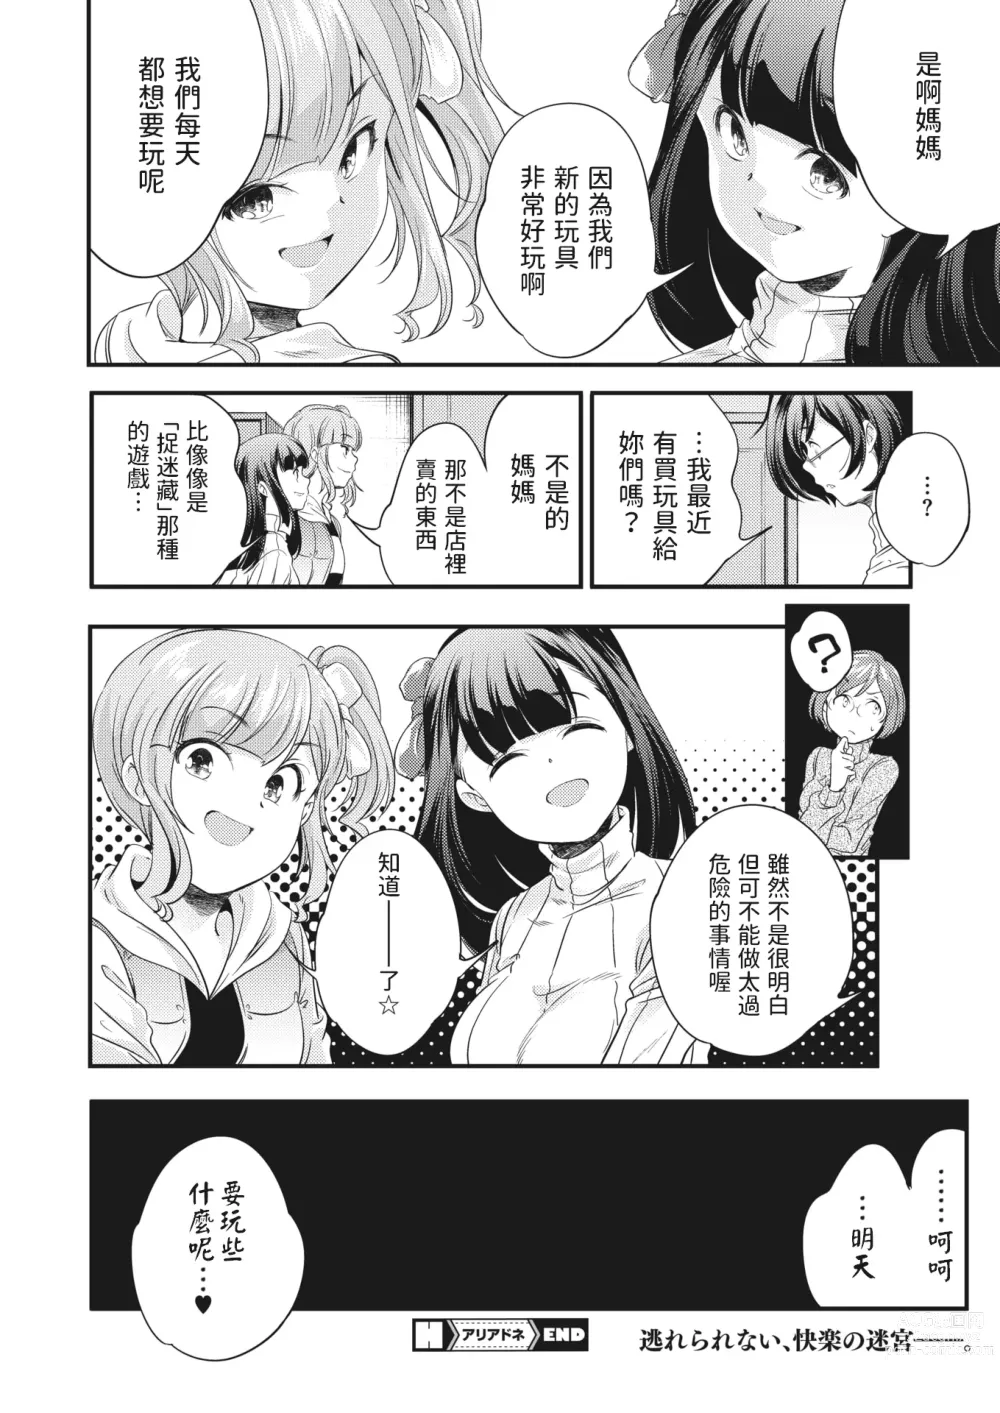 Page 22 of manga Ariadone